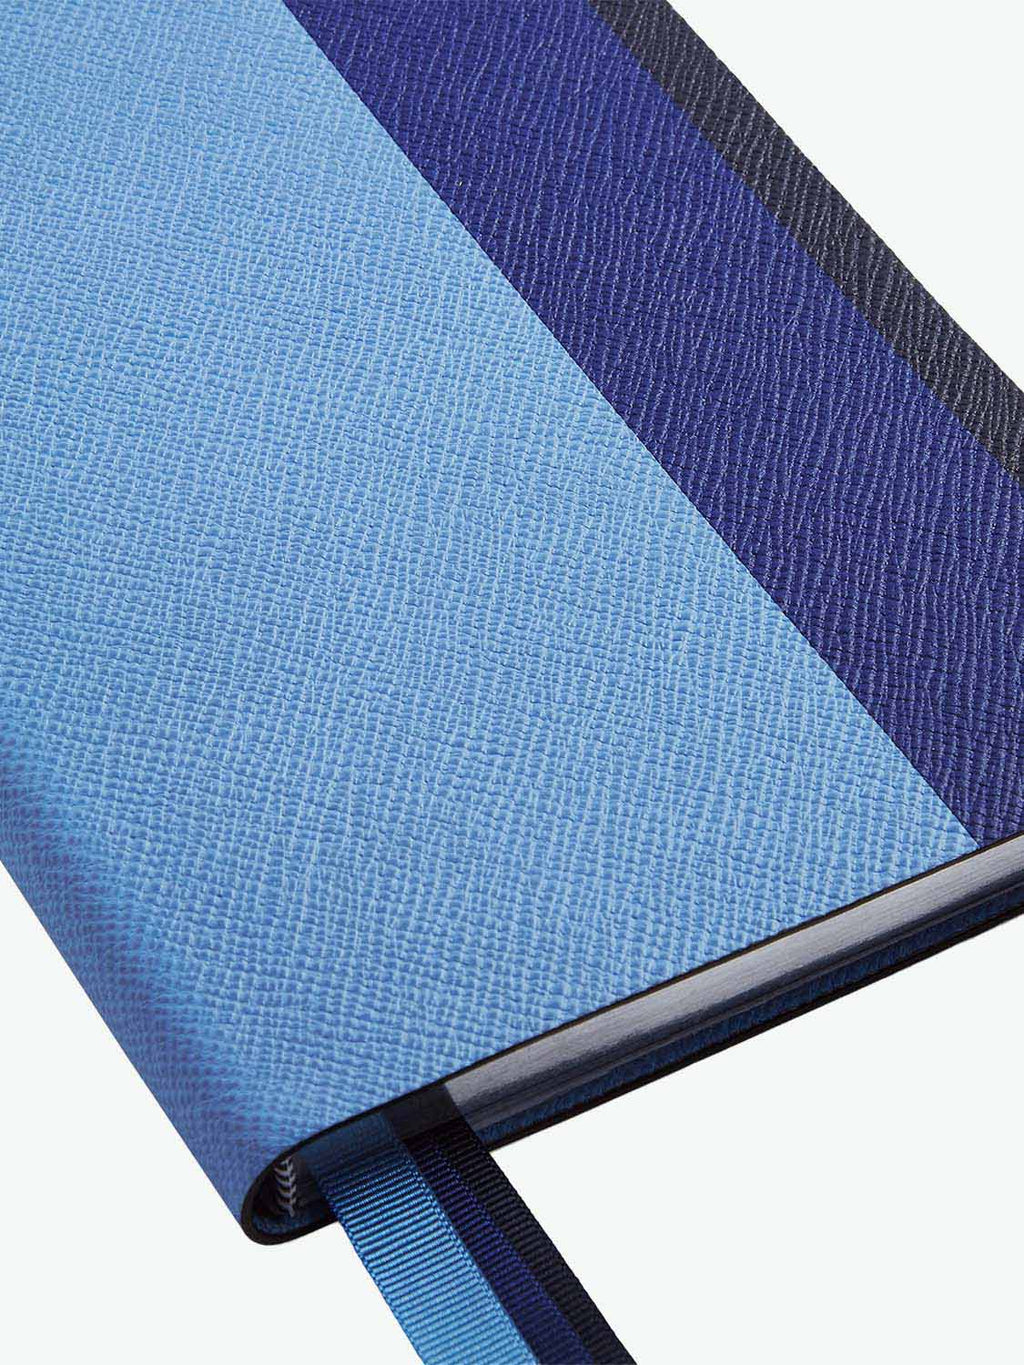 Smythson Printed Stripe Soho Notebook Nile Blue